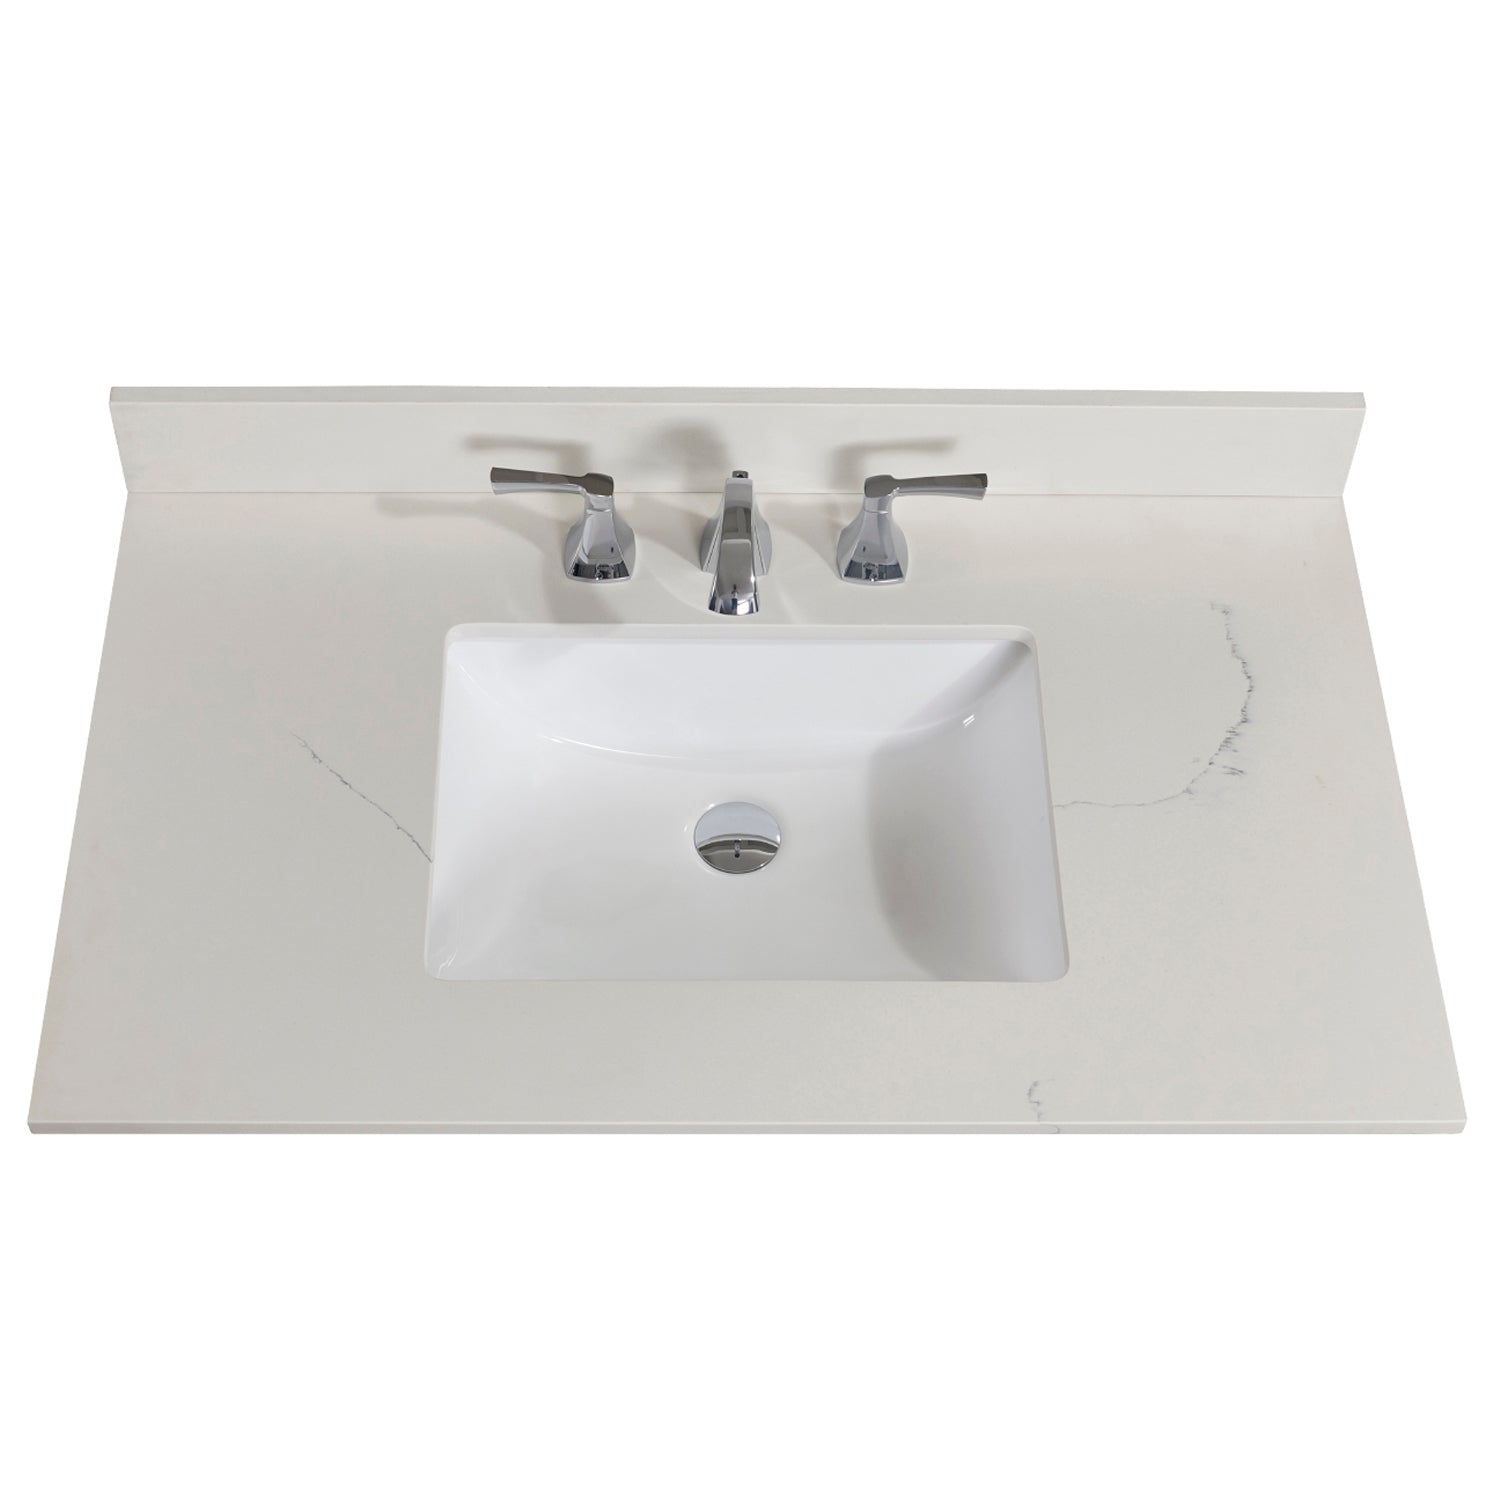 Belluno Single Sink Bathroom Vanity Countertop in Milano White